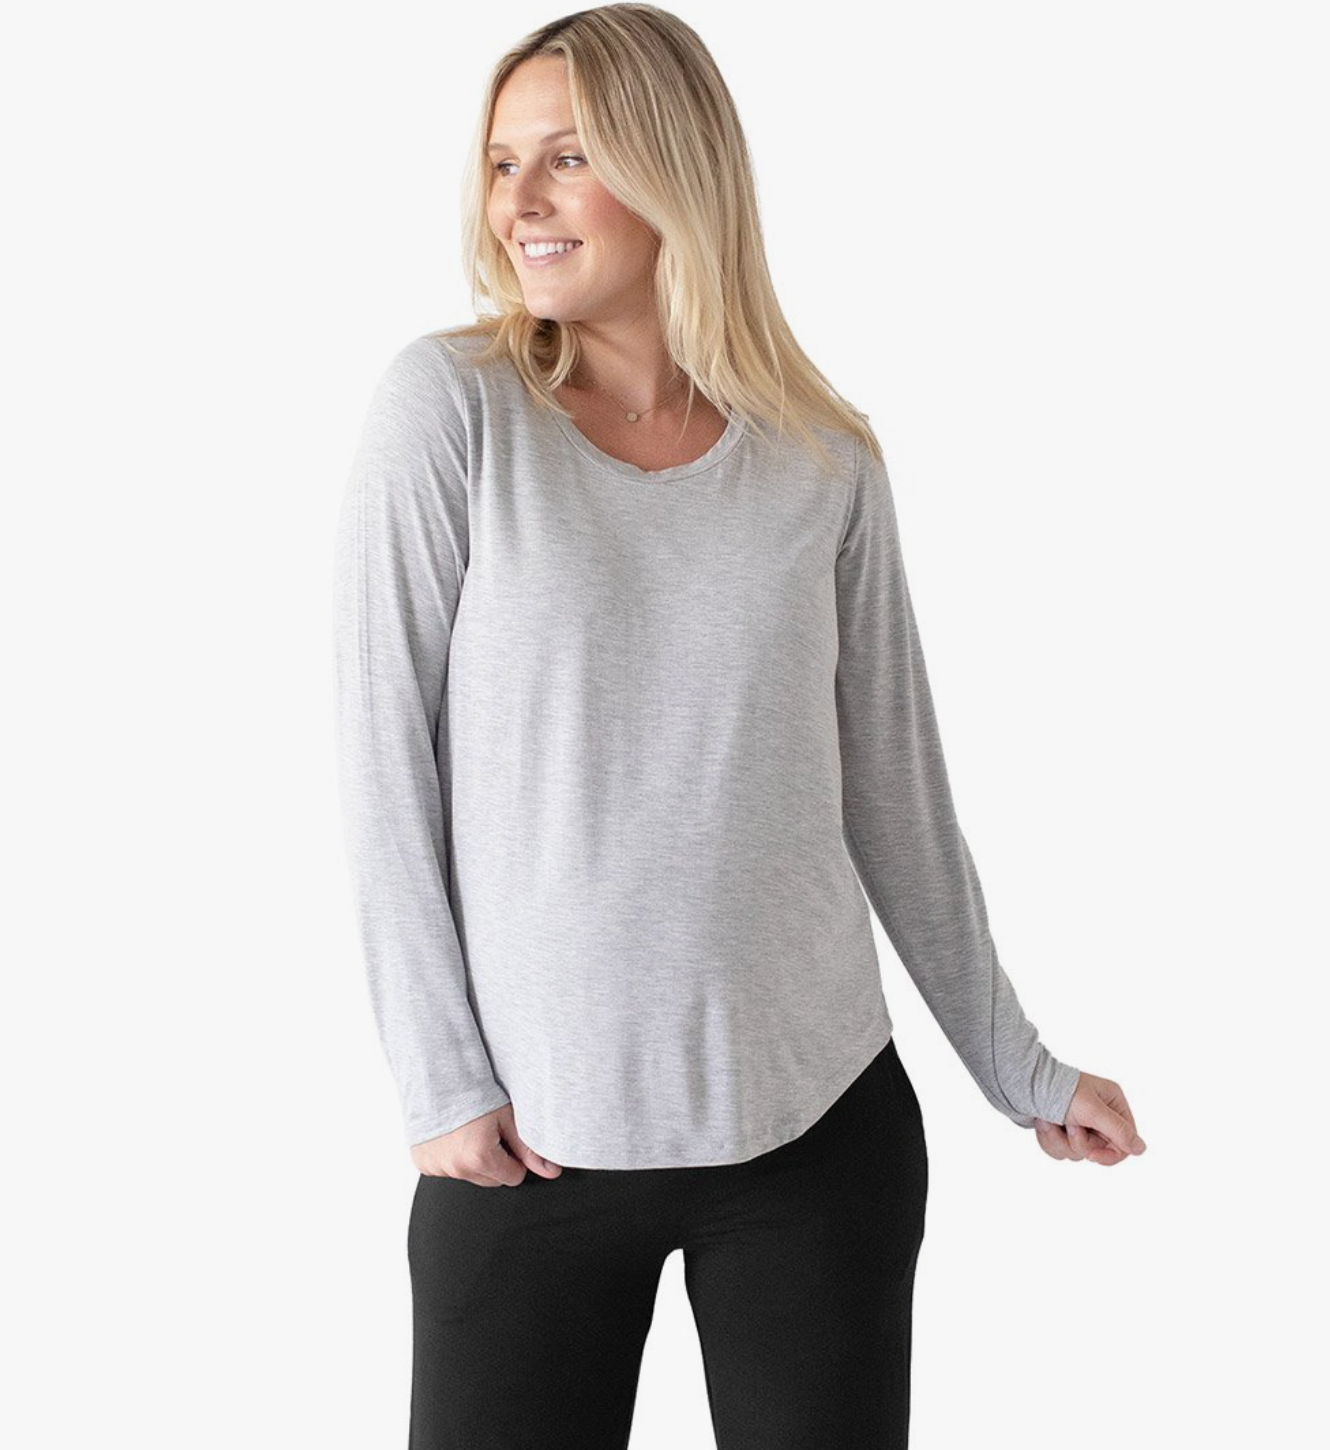 Kindred Bravely - Grey Bamboo Maternity & Nursing Long Sleeve Shirt